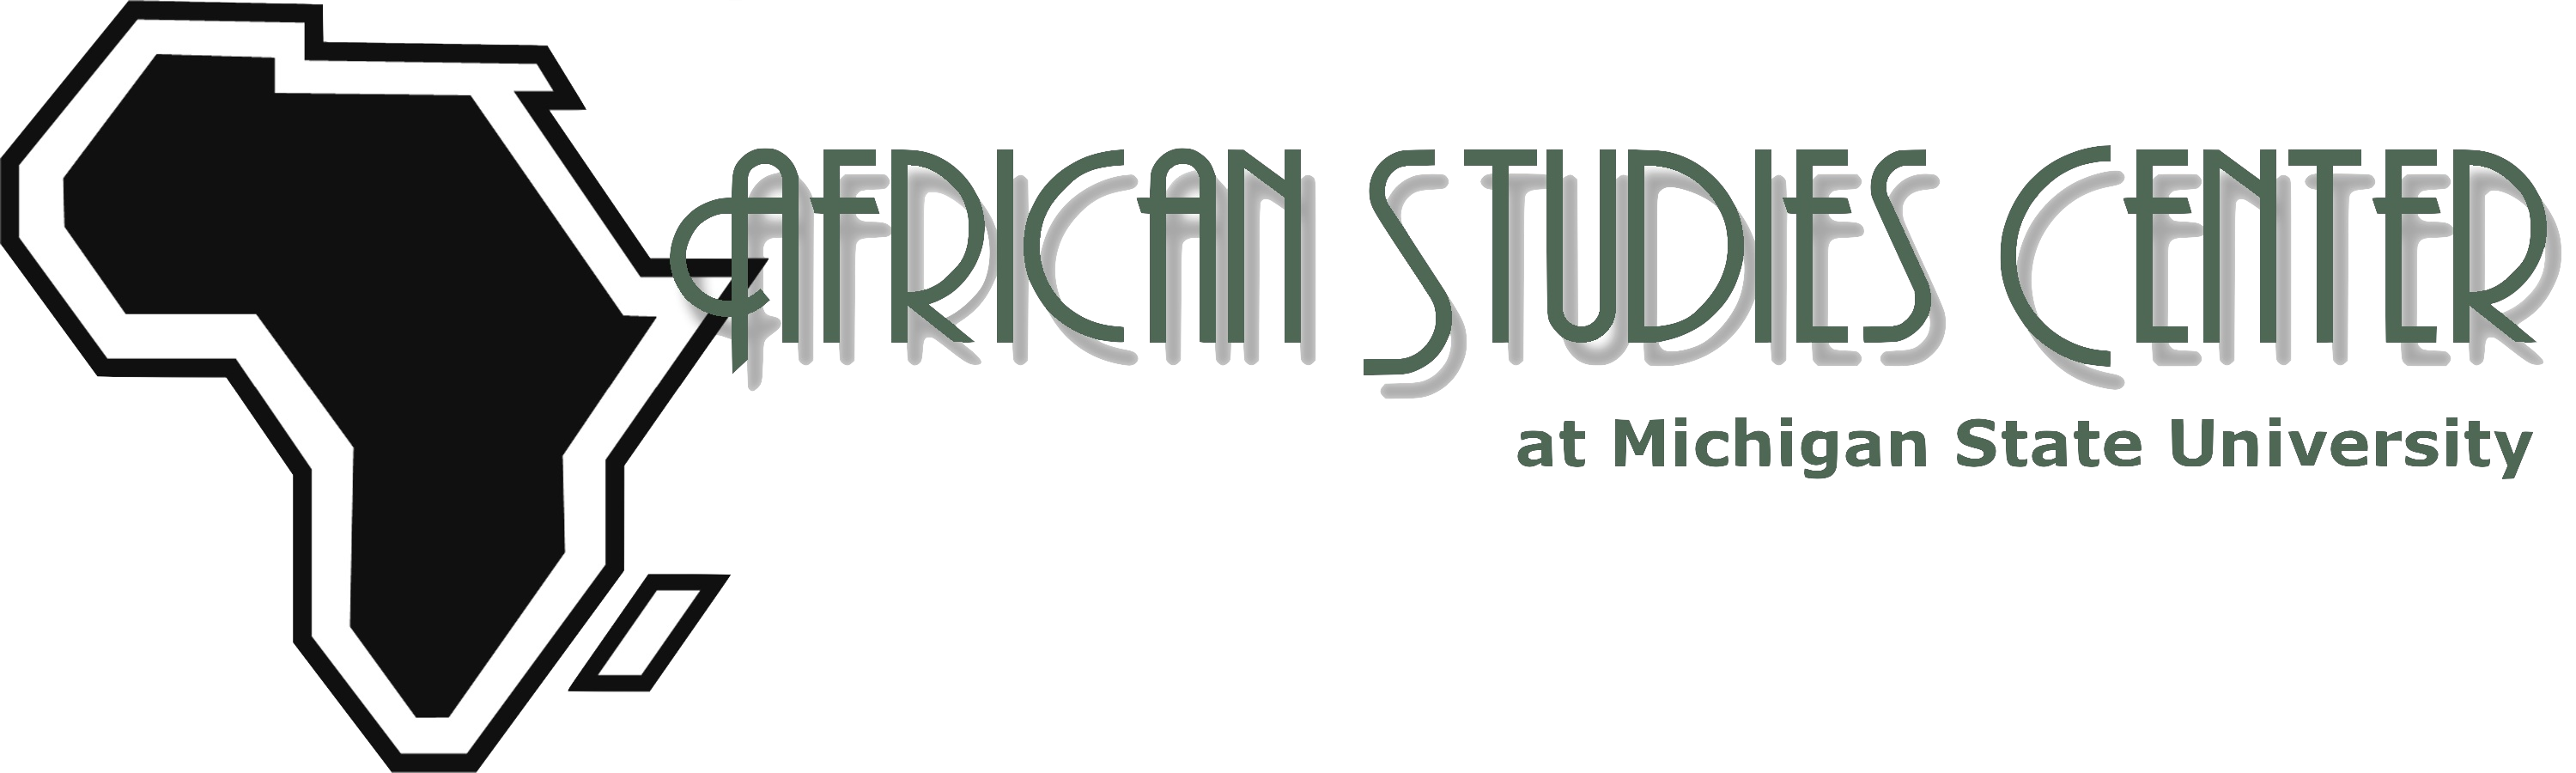 African Studies Center logo